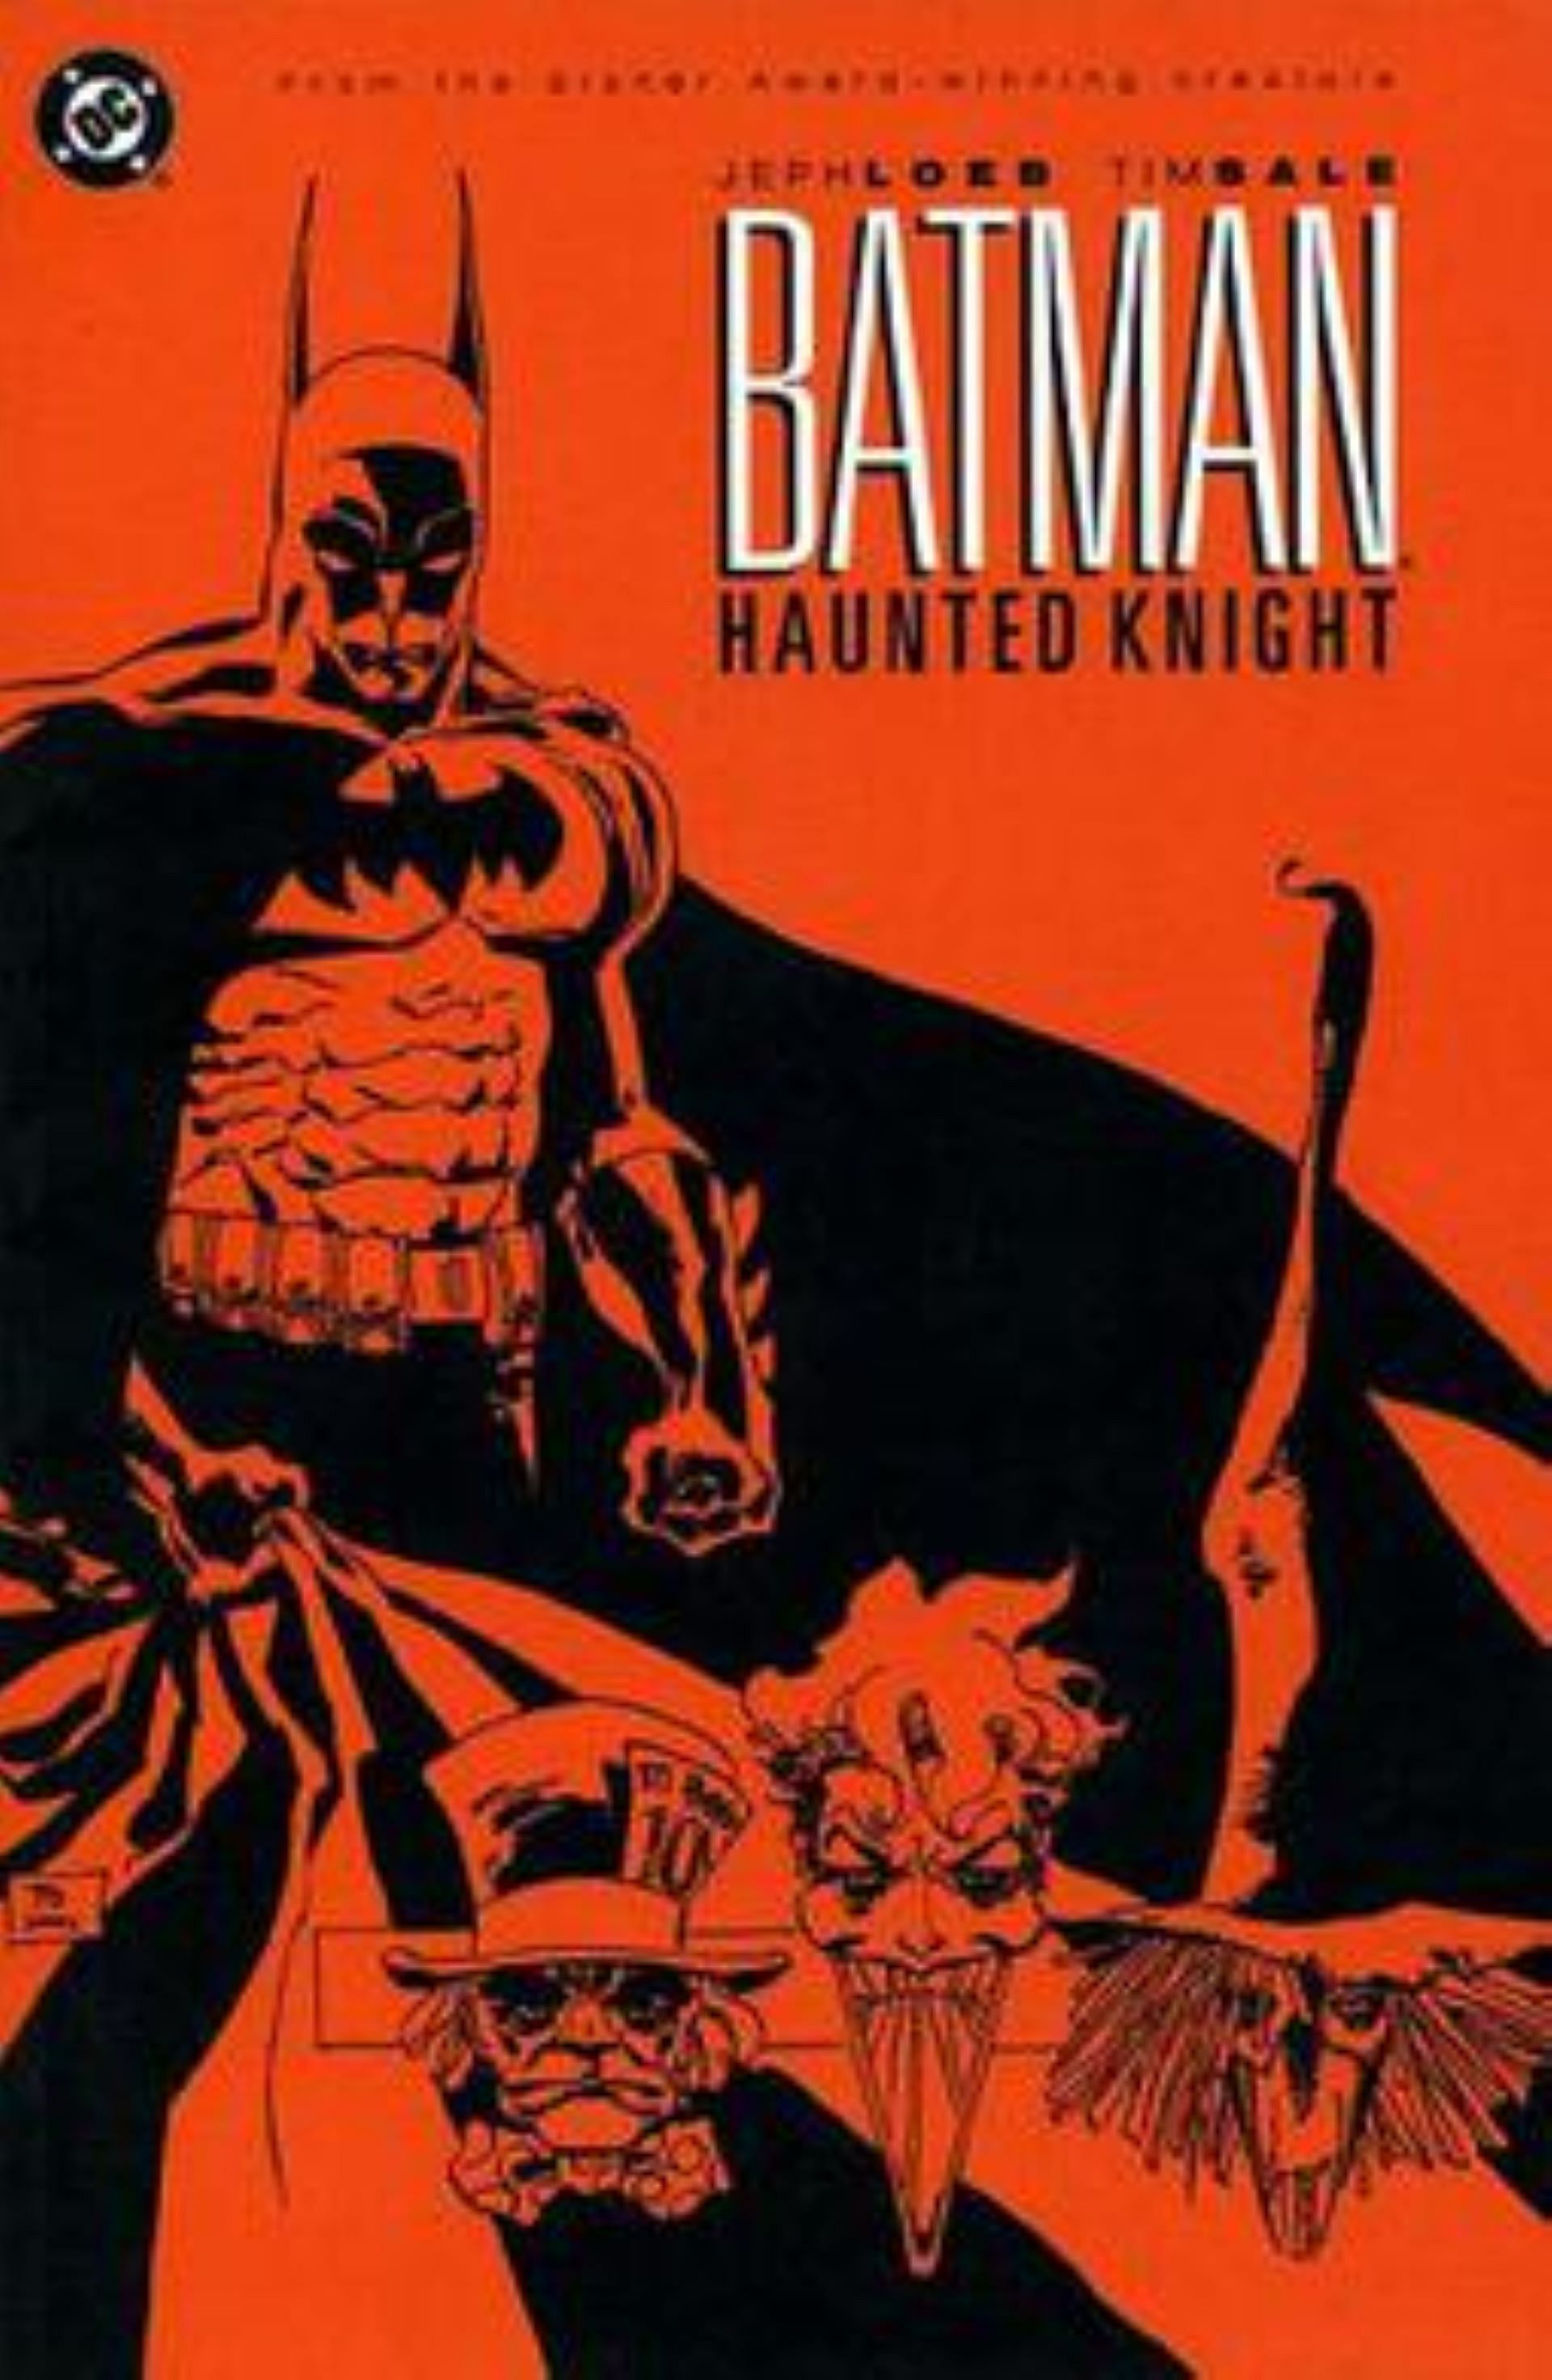 Batman: Haunted Night (Image via DC)